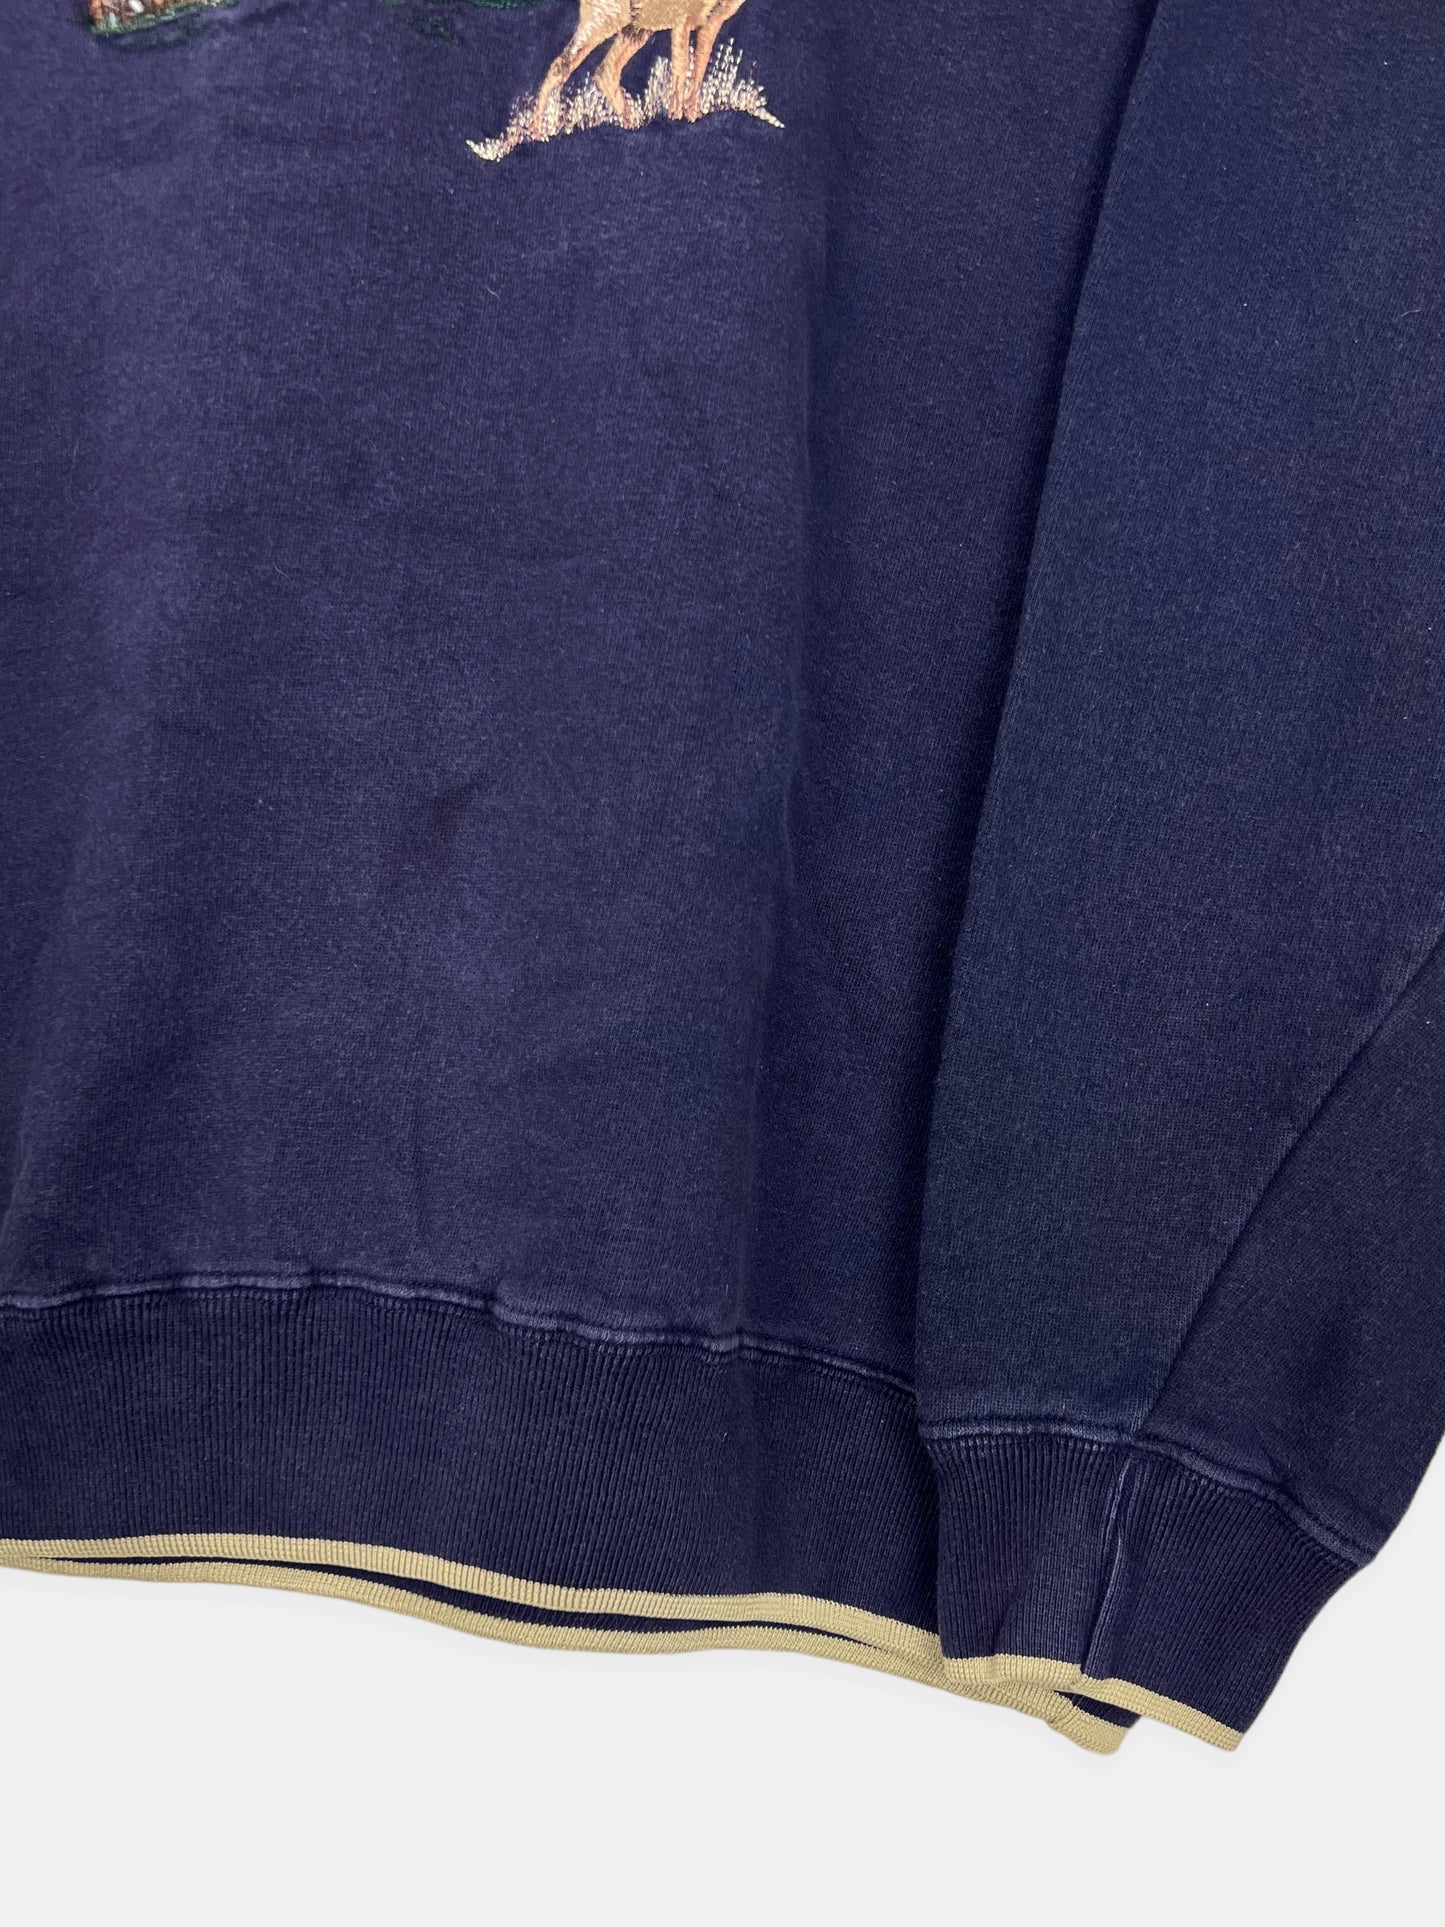 90's Big Buck Embroidered Vintage Sweatshirt Size S-M